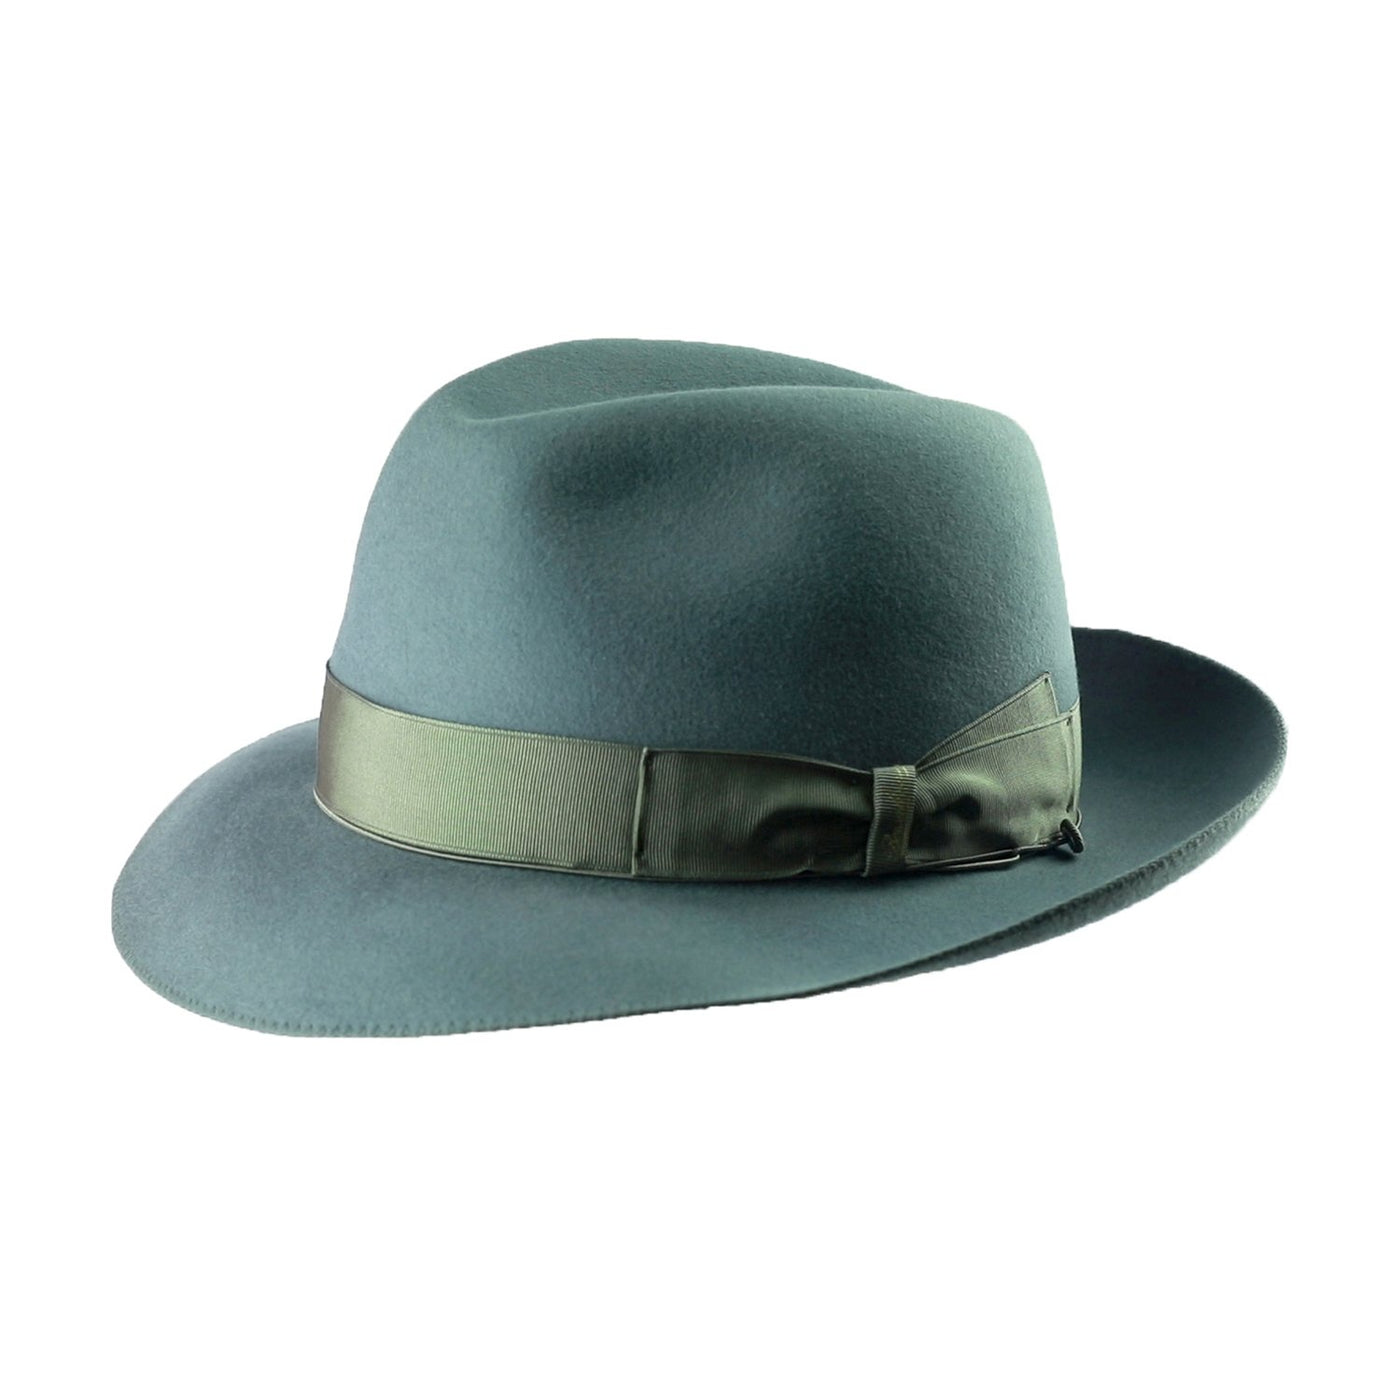 Astuccio 238 - Grey, product_type] - Borsalino for Atica fedora hat